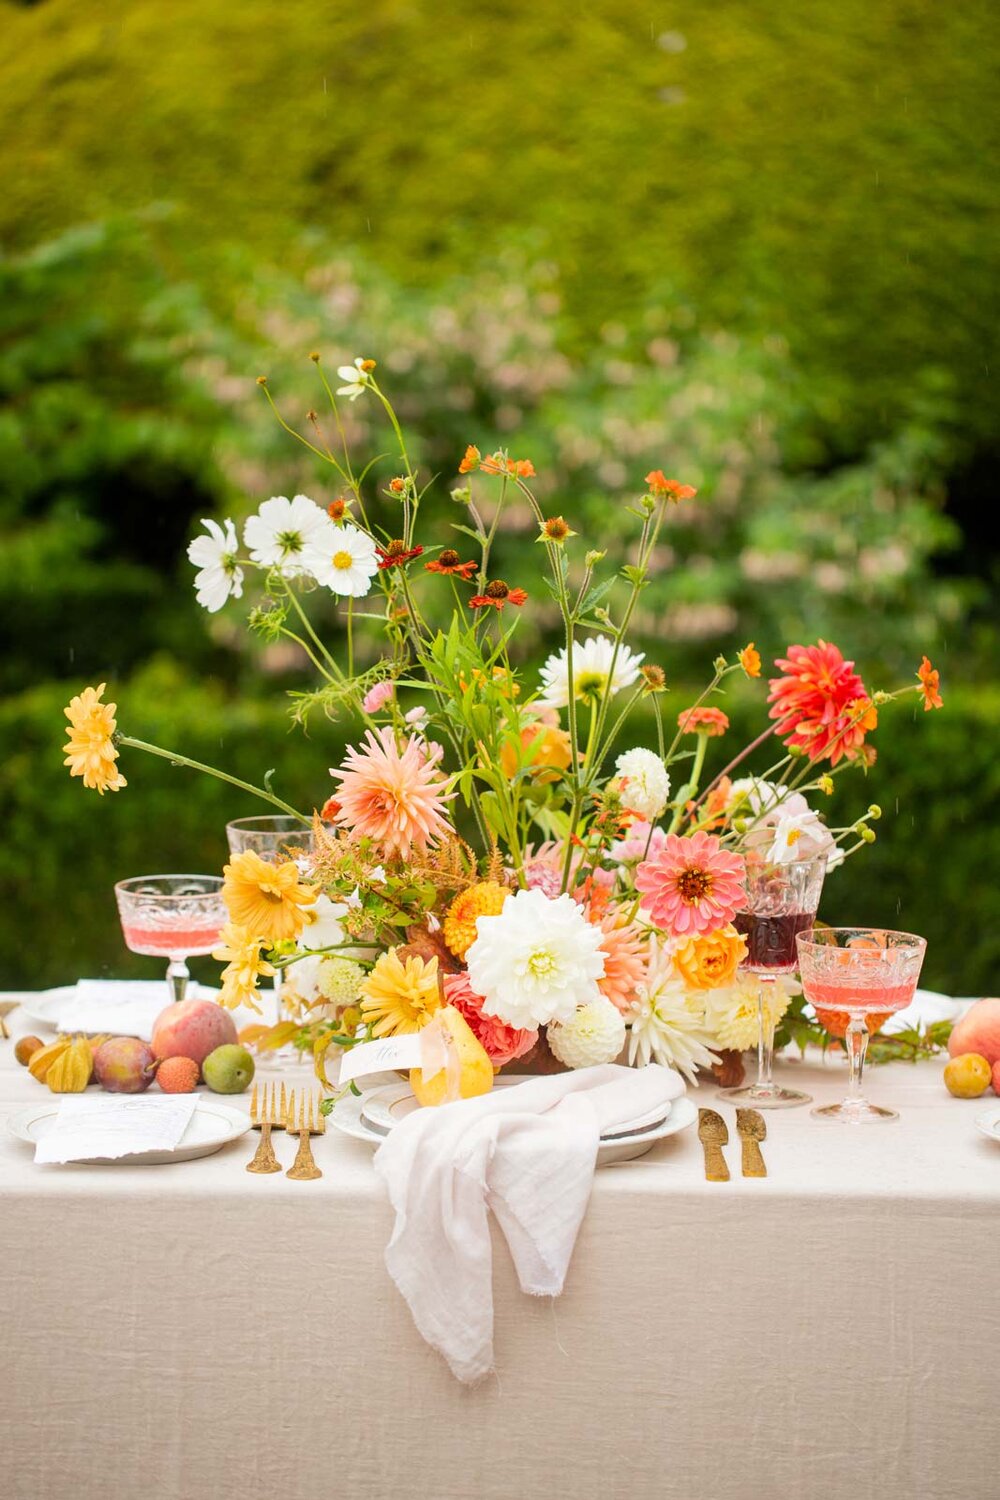 floral-arrangement-wedding-table-setting-at-historic-wedding-venue-wotton-house-dorking.jpg